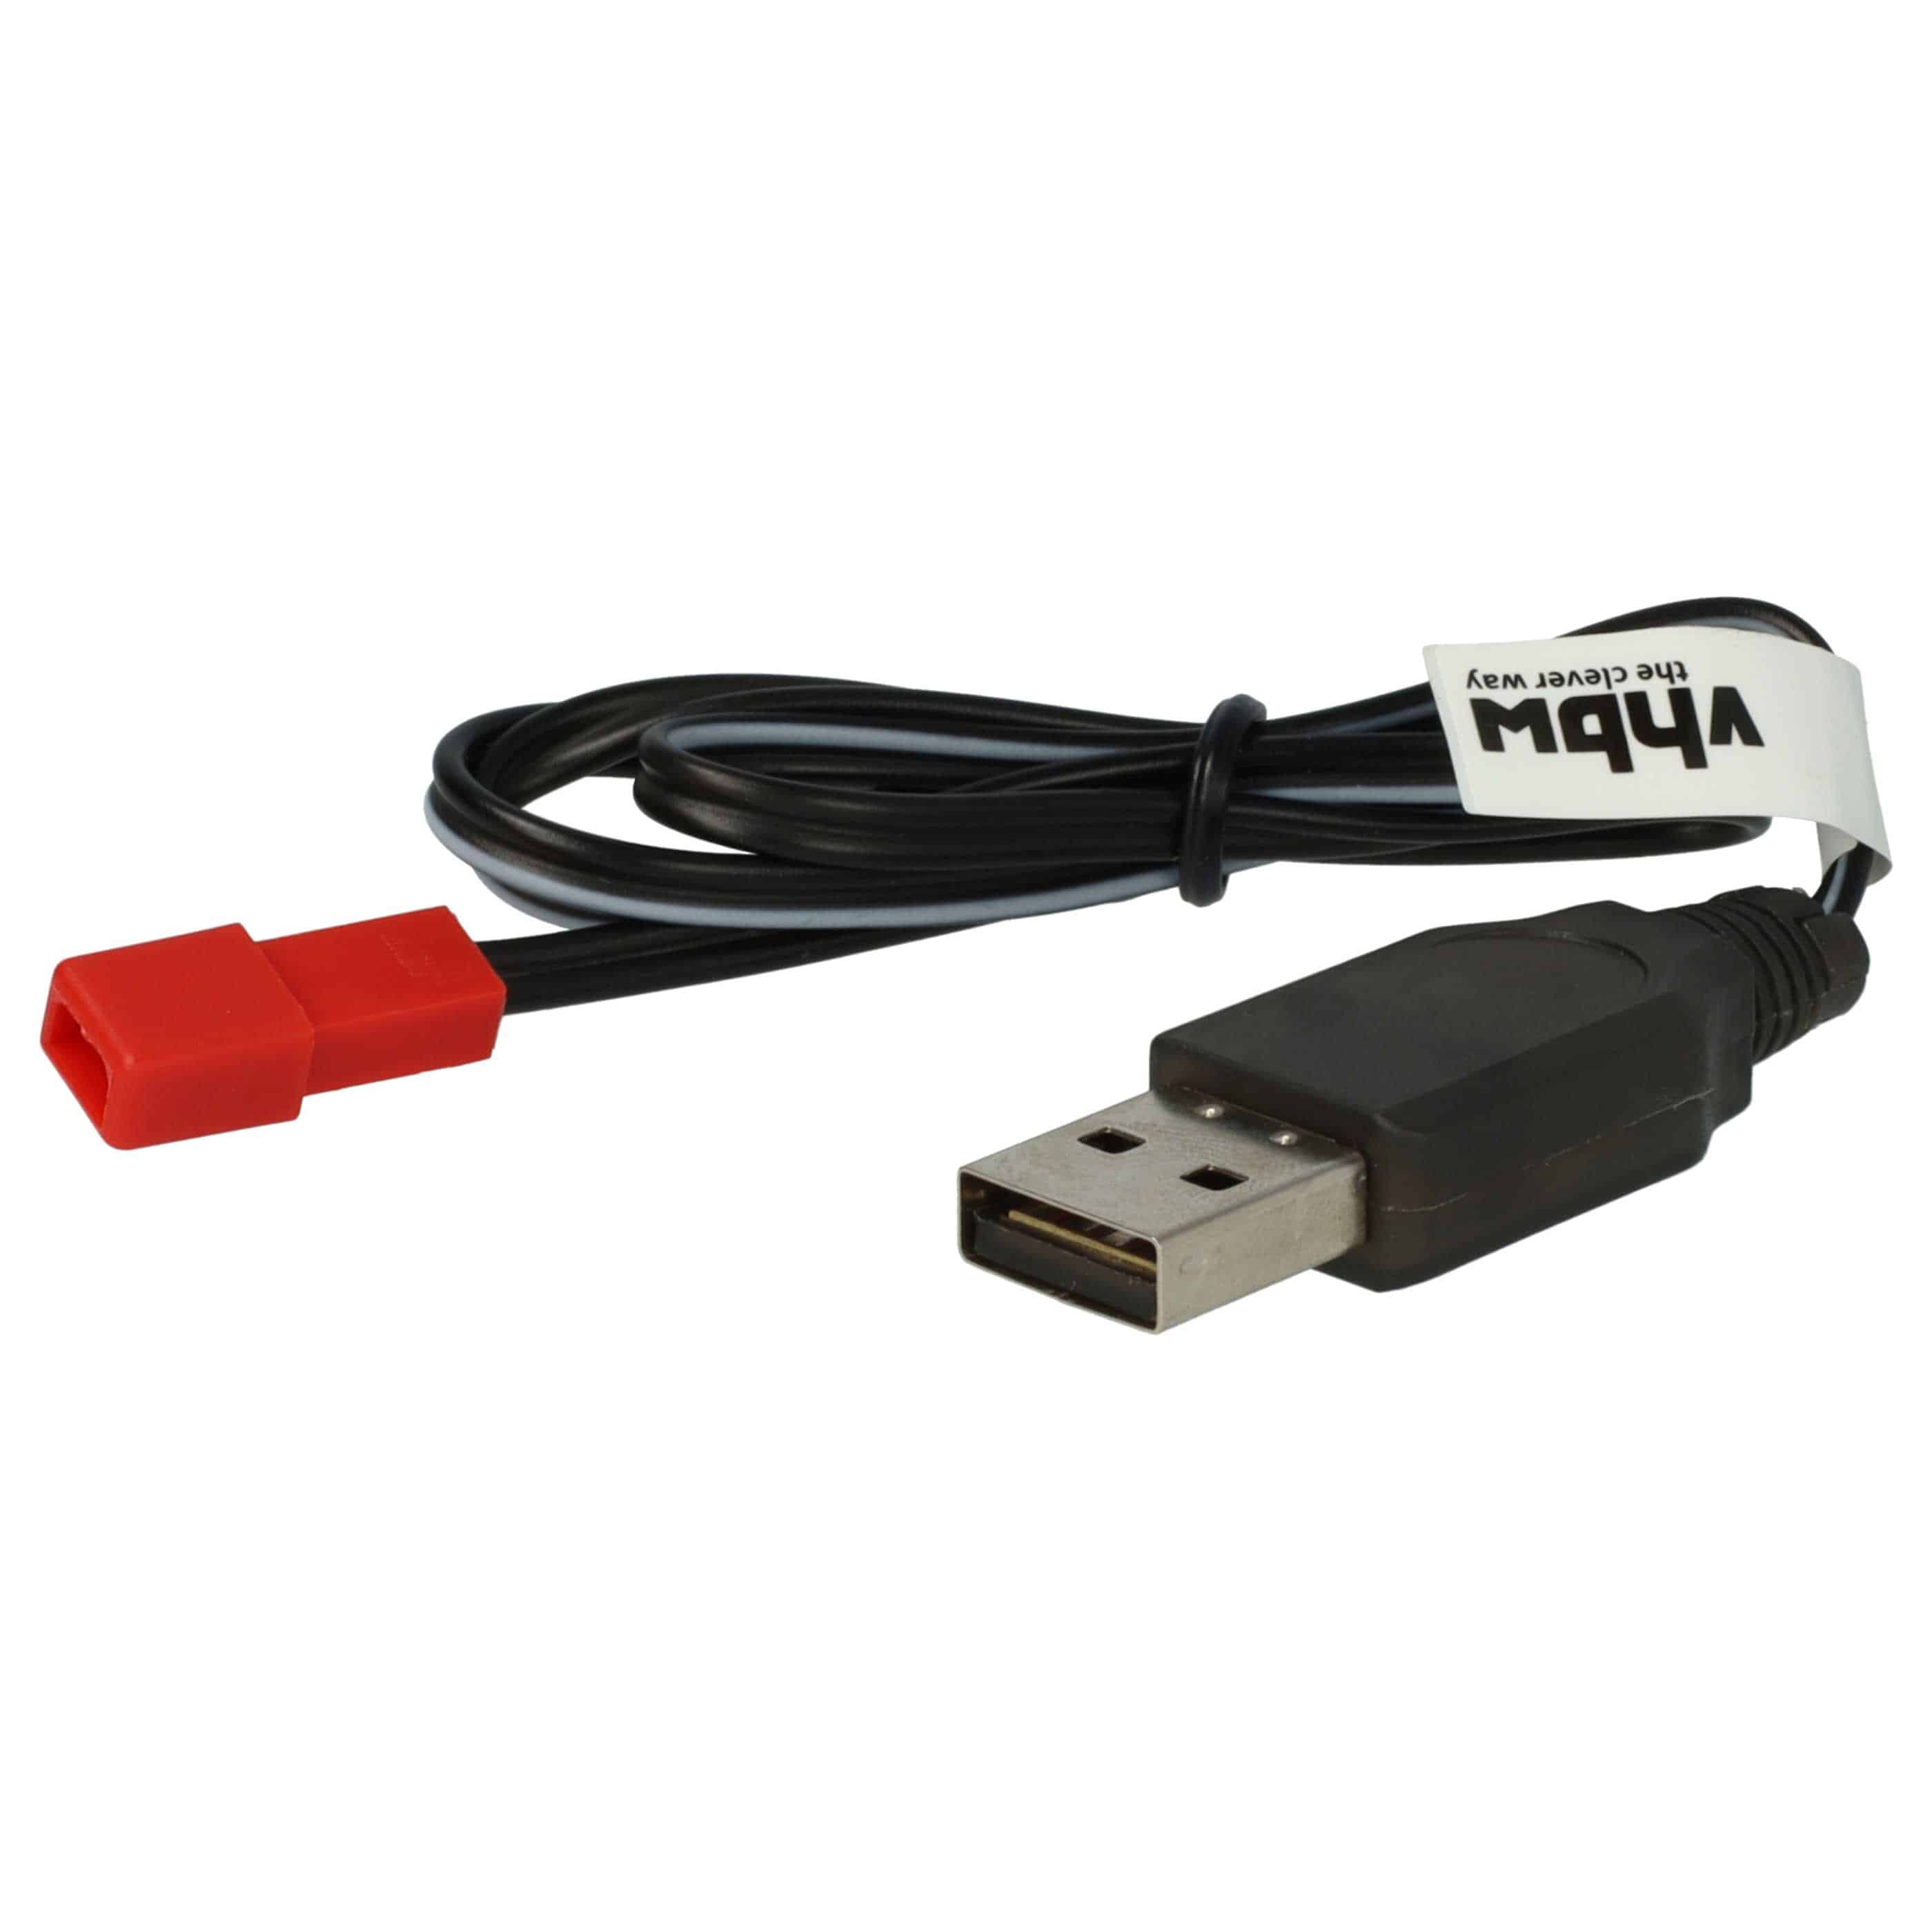 USB-Ladekabel passend für RC-Akkus mit JST-Anschluss, RC-Modellbau Akkupacks - 60cm 3,6V